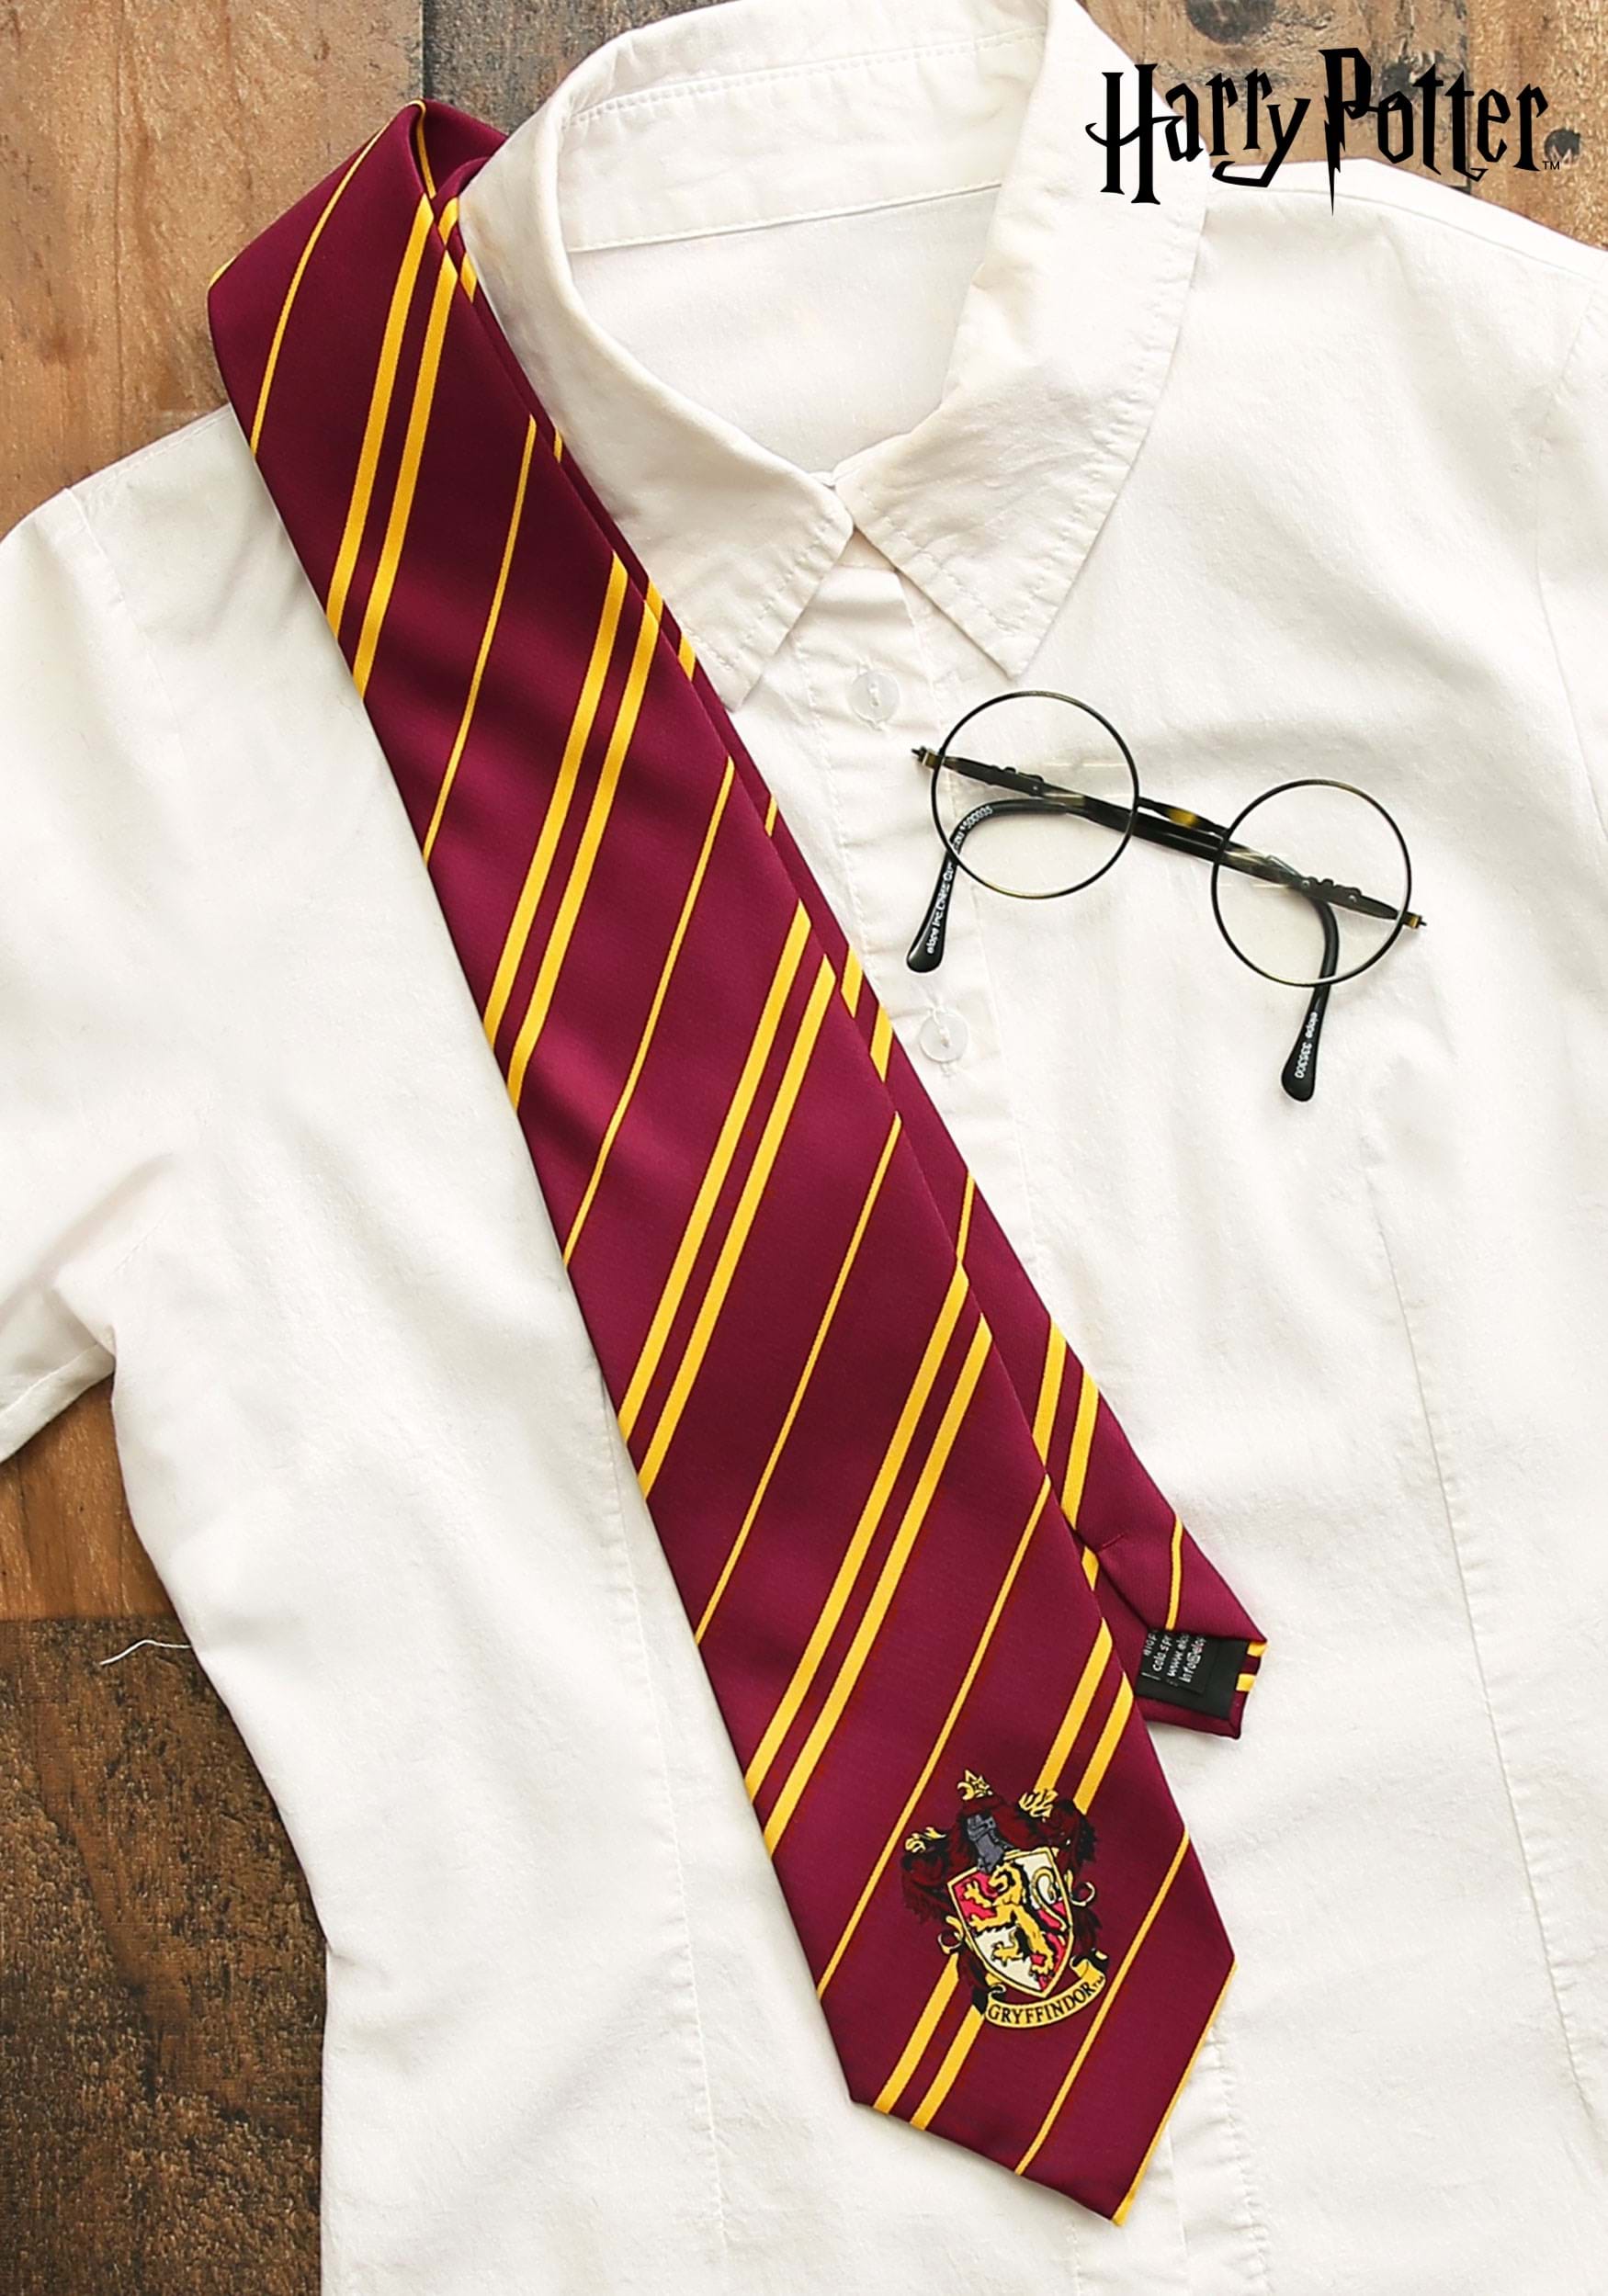 Harry Potter Tie - Gryffindor